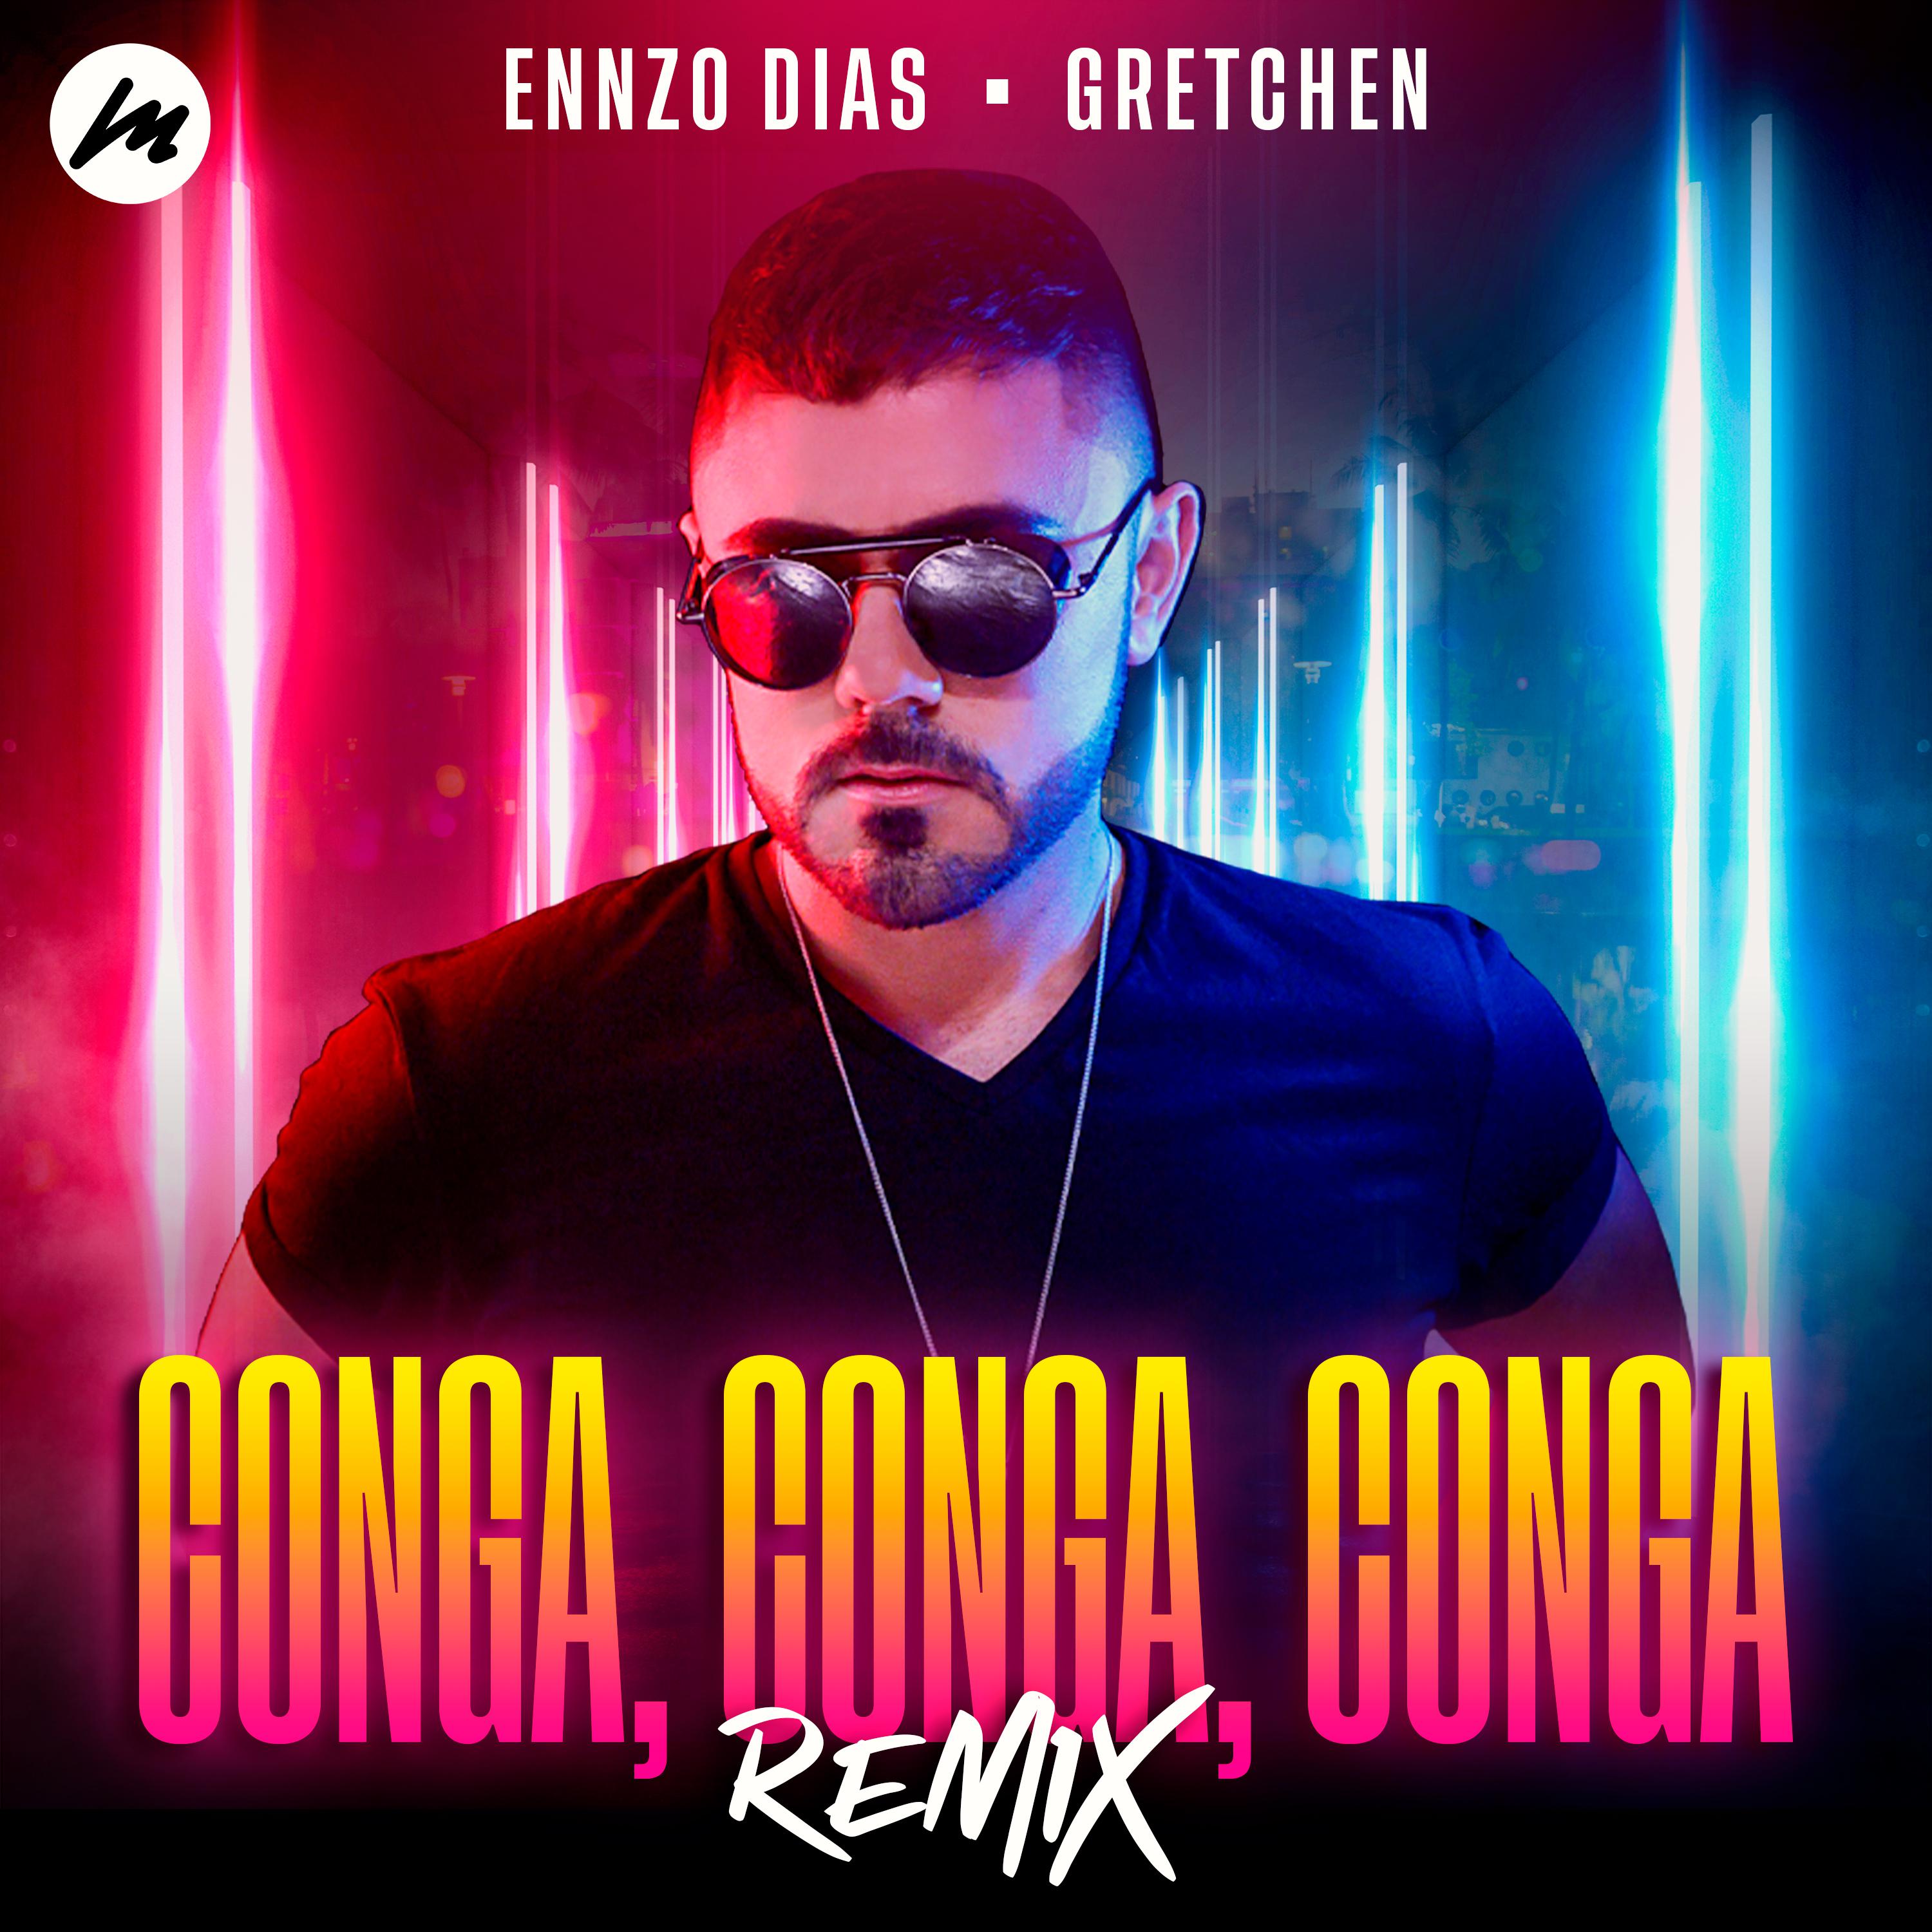 Ennzo Dias - Conga, Conga, Conga (Remix)